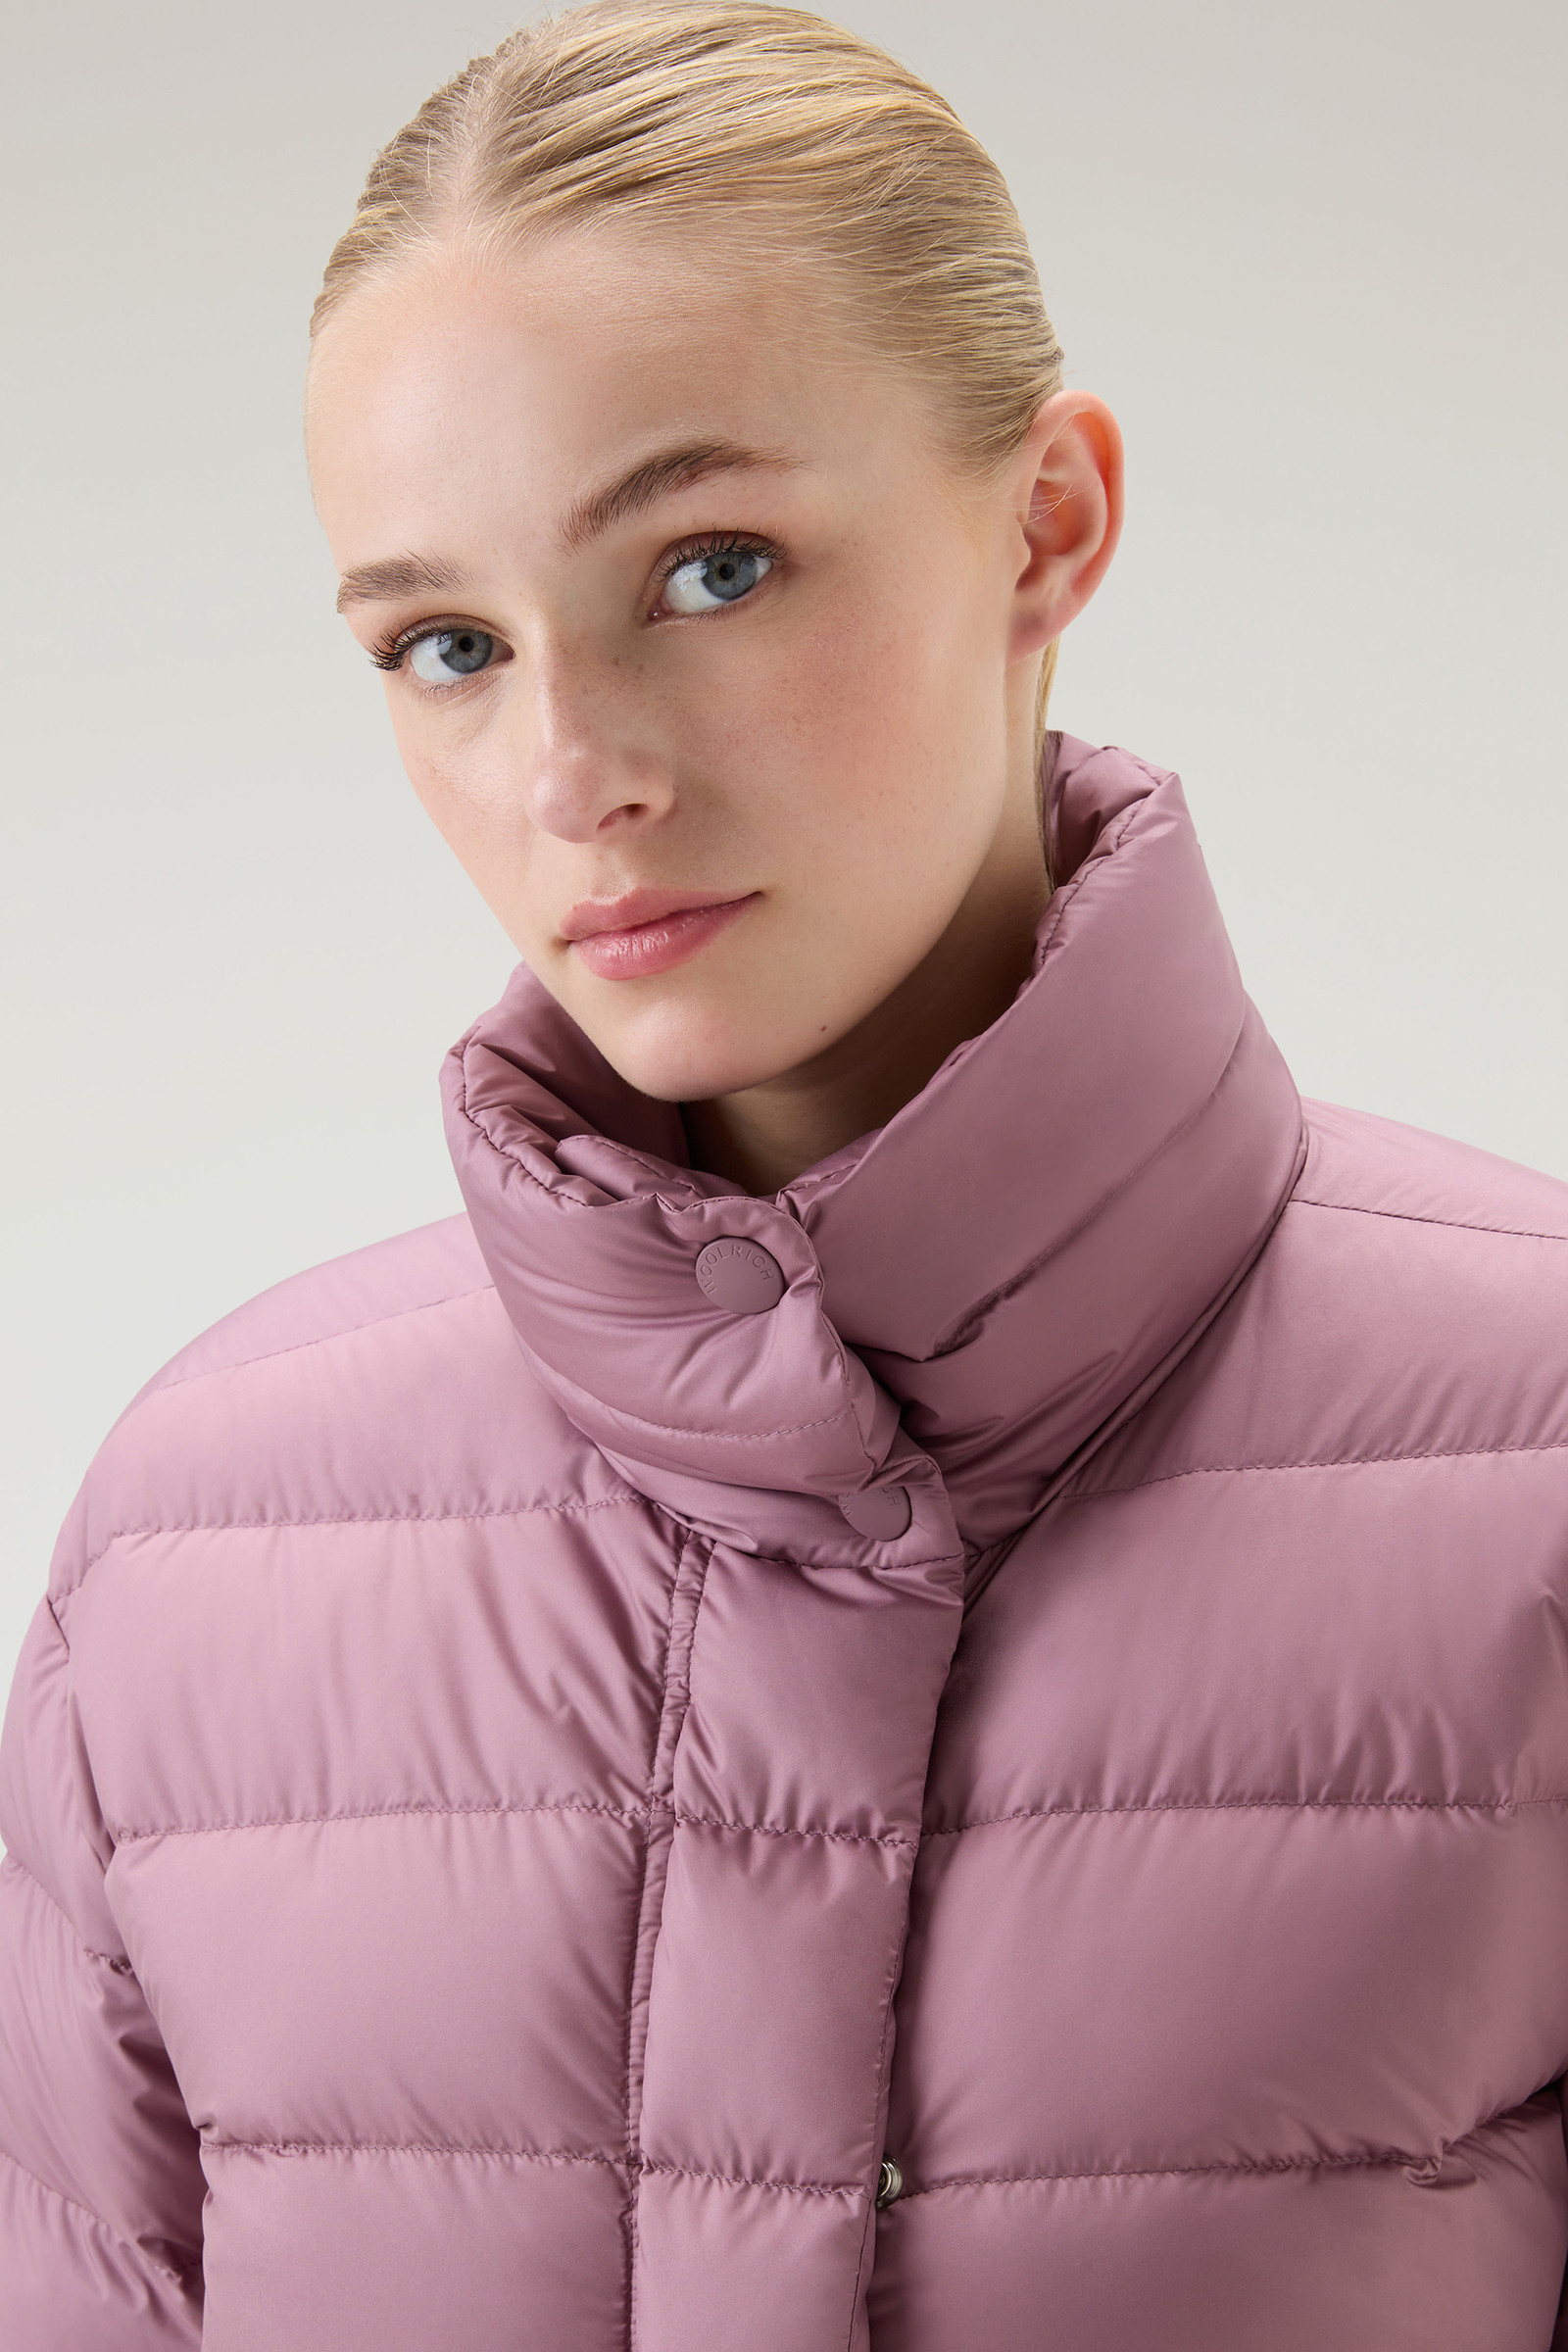 Women's Ellis Microfiber Down Jacket Pink | Woolrich USA